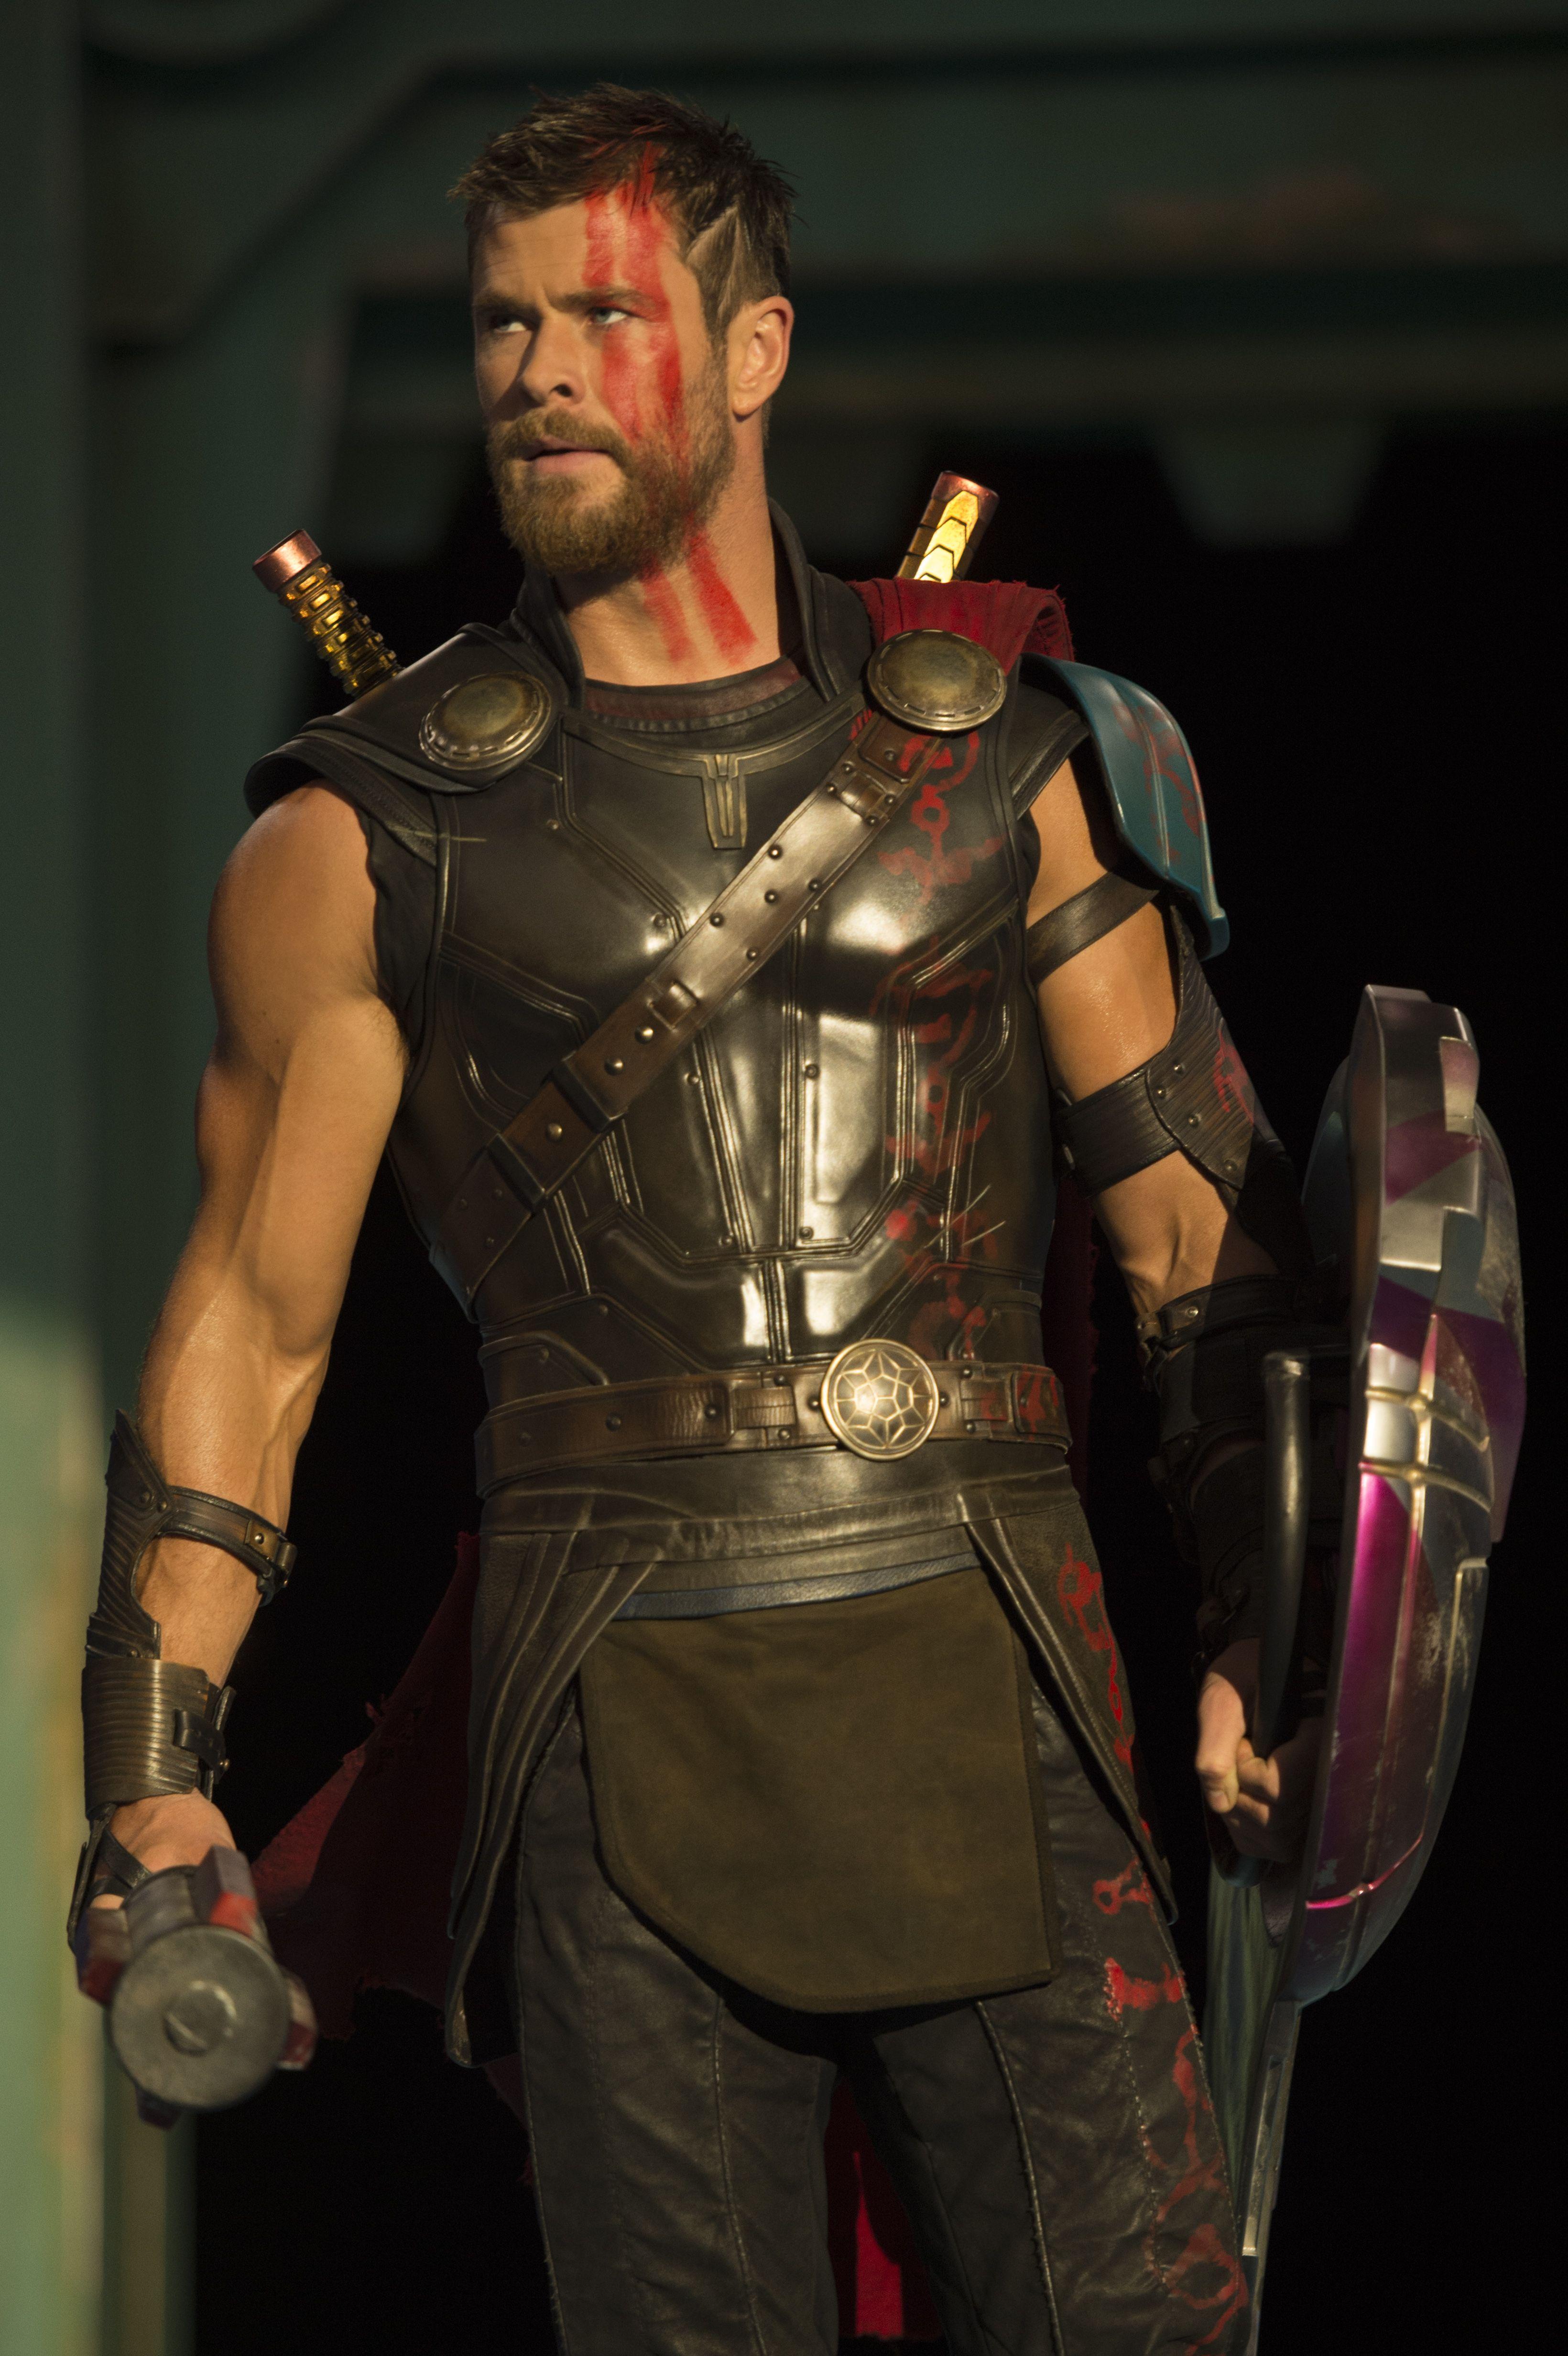 Thor In Thor Rangnarok Wallpapers